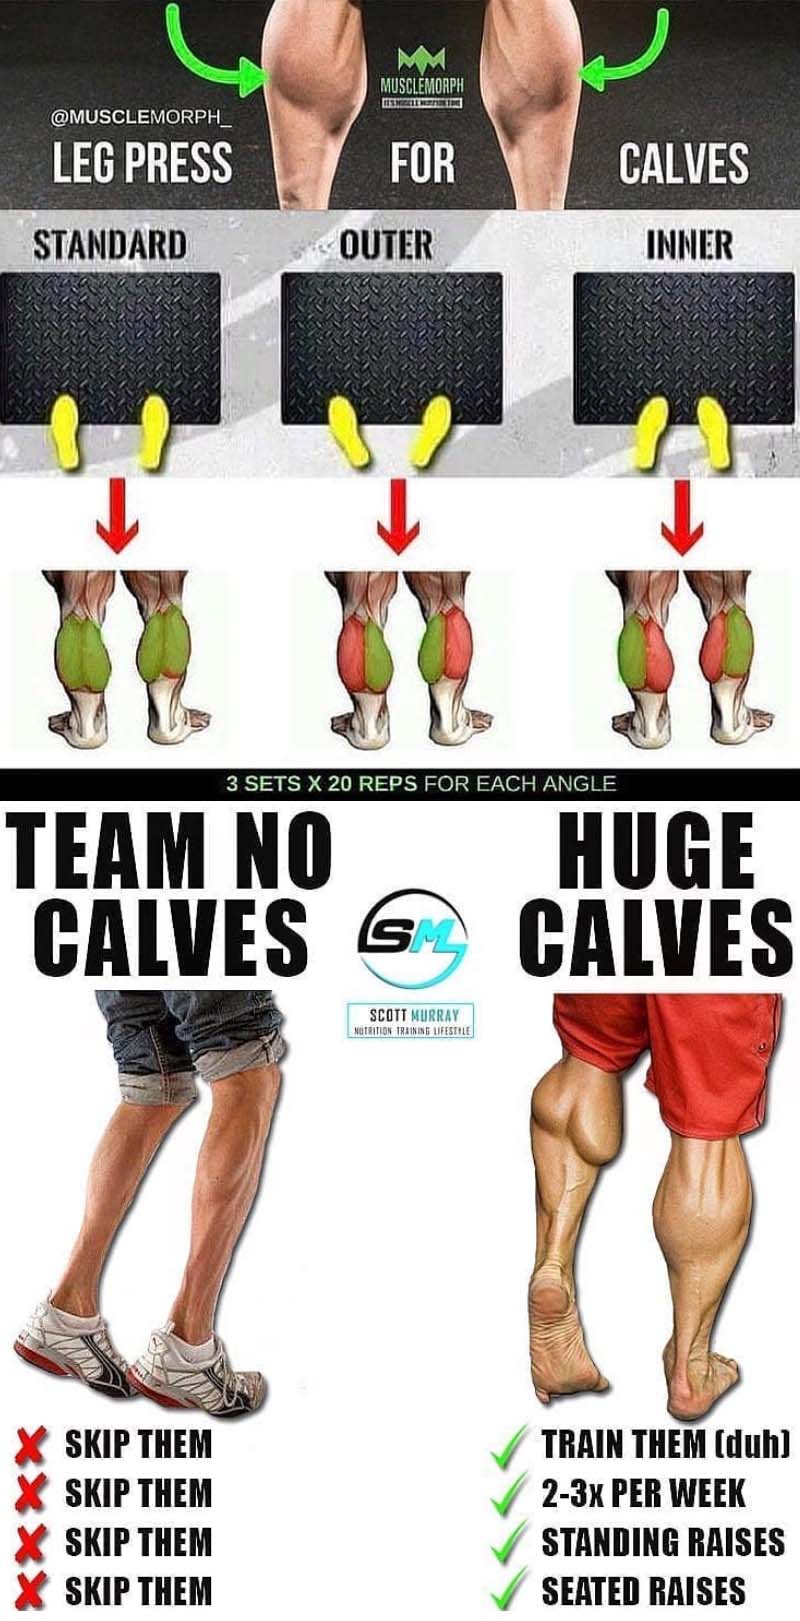 Calves exercises 